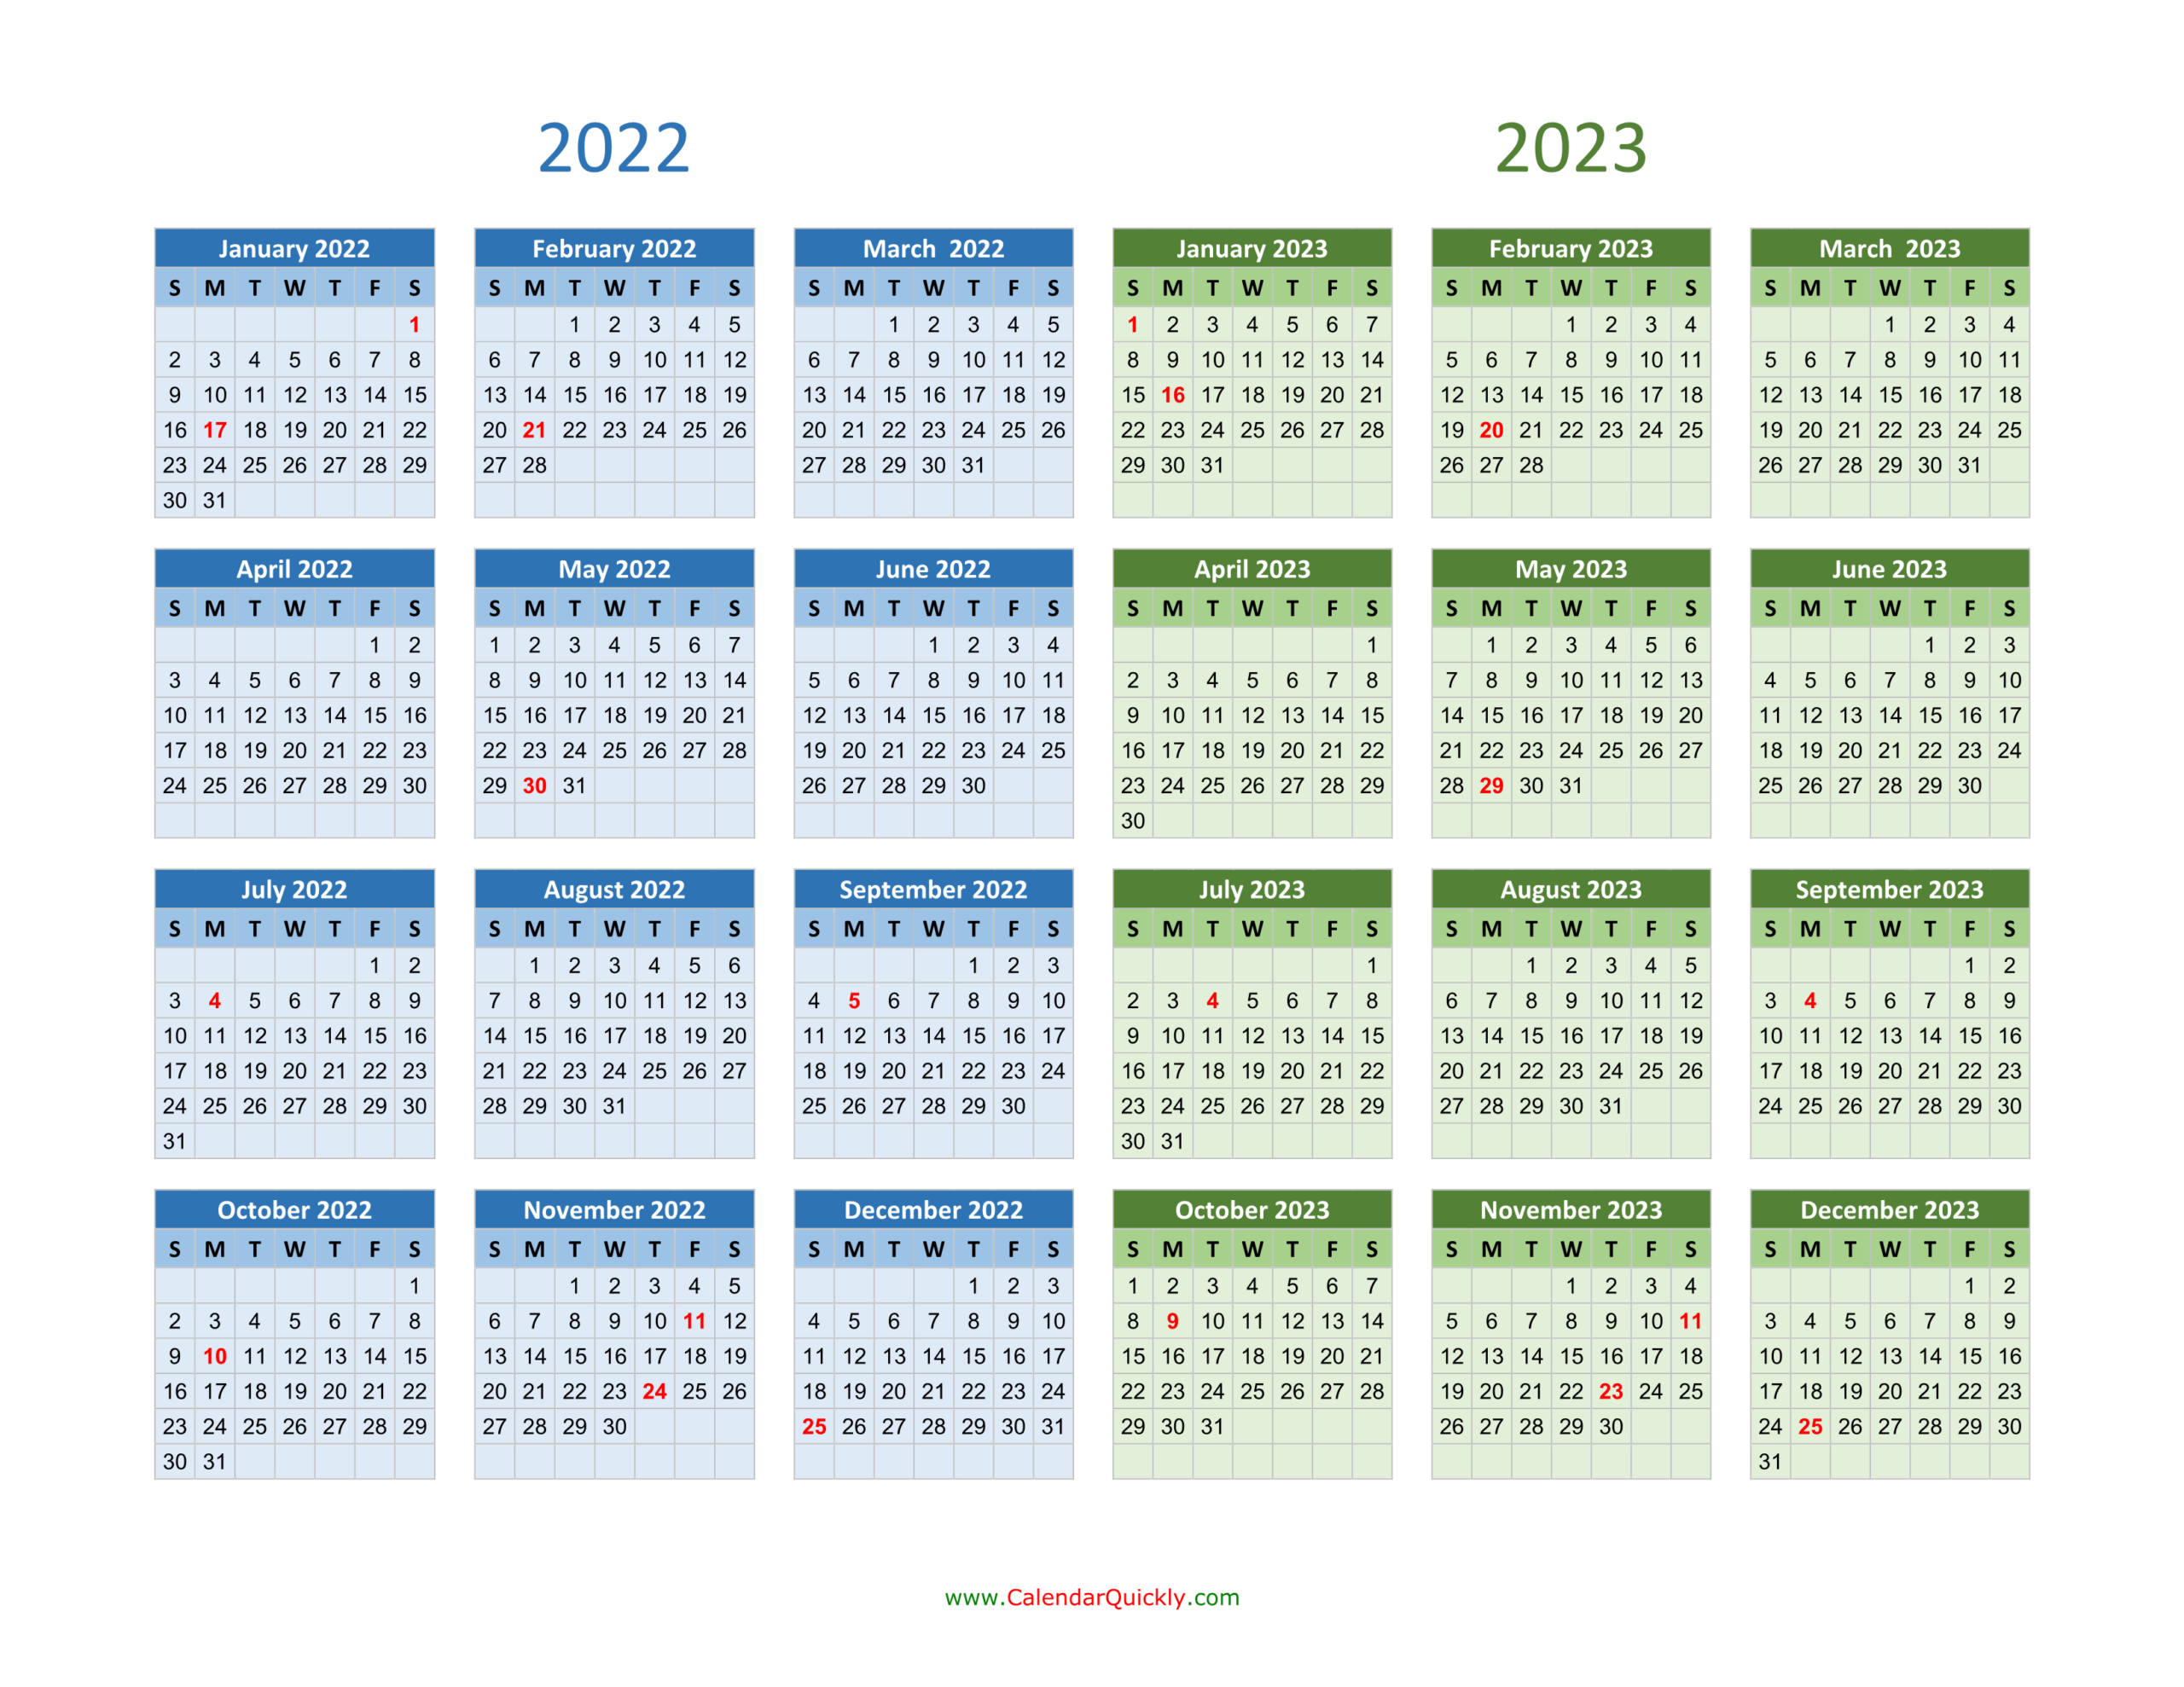 2022 And 2023 Calendar | Calendar Quickly-Calendar Year 2022 And 2023